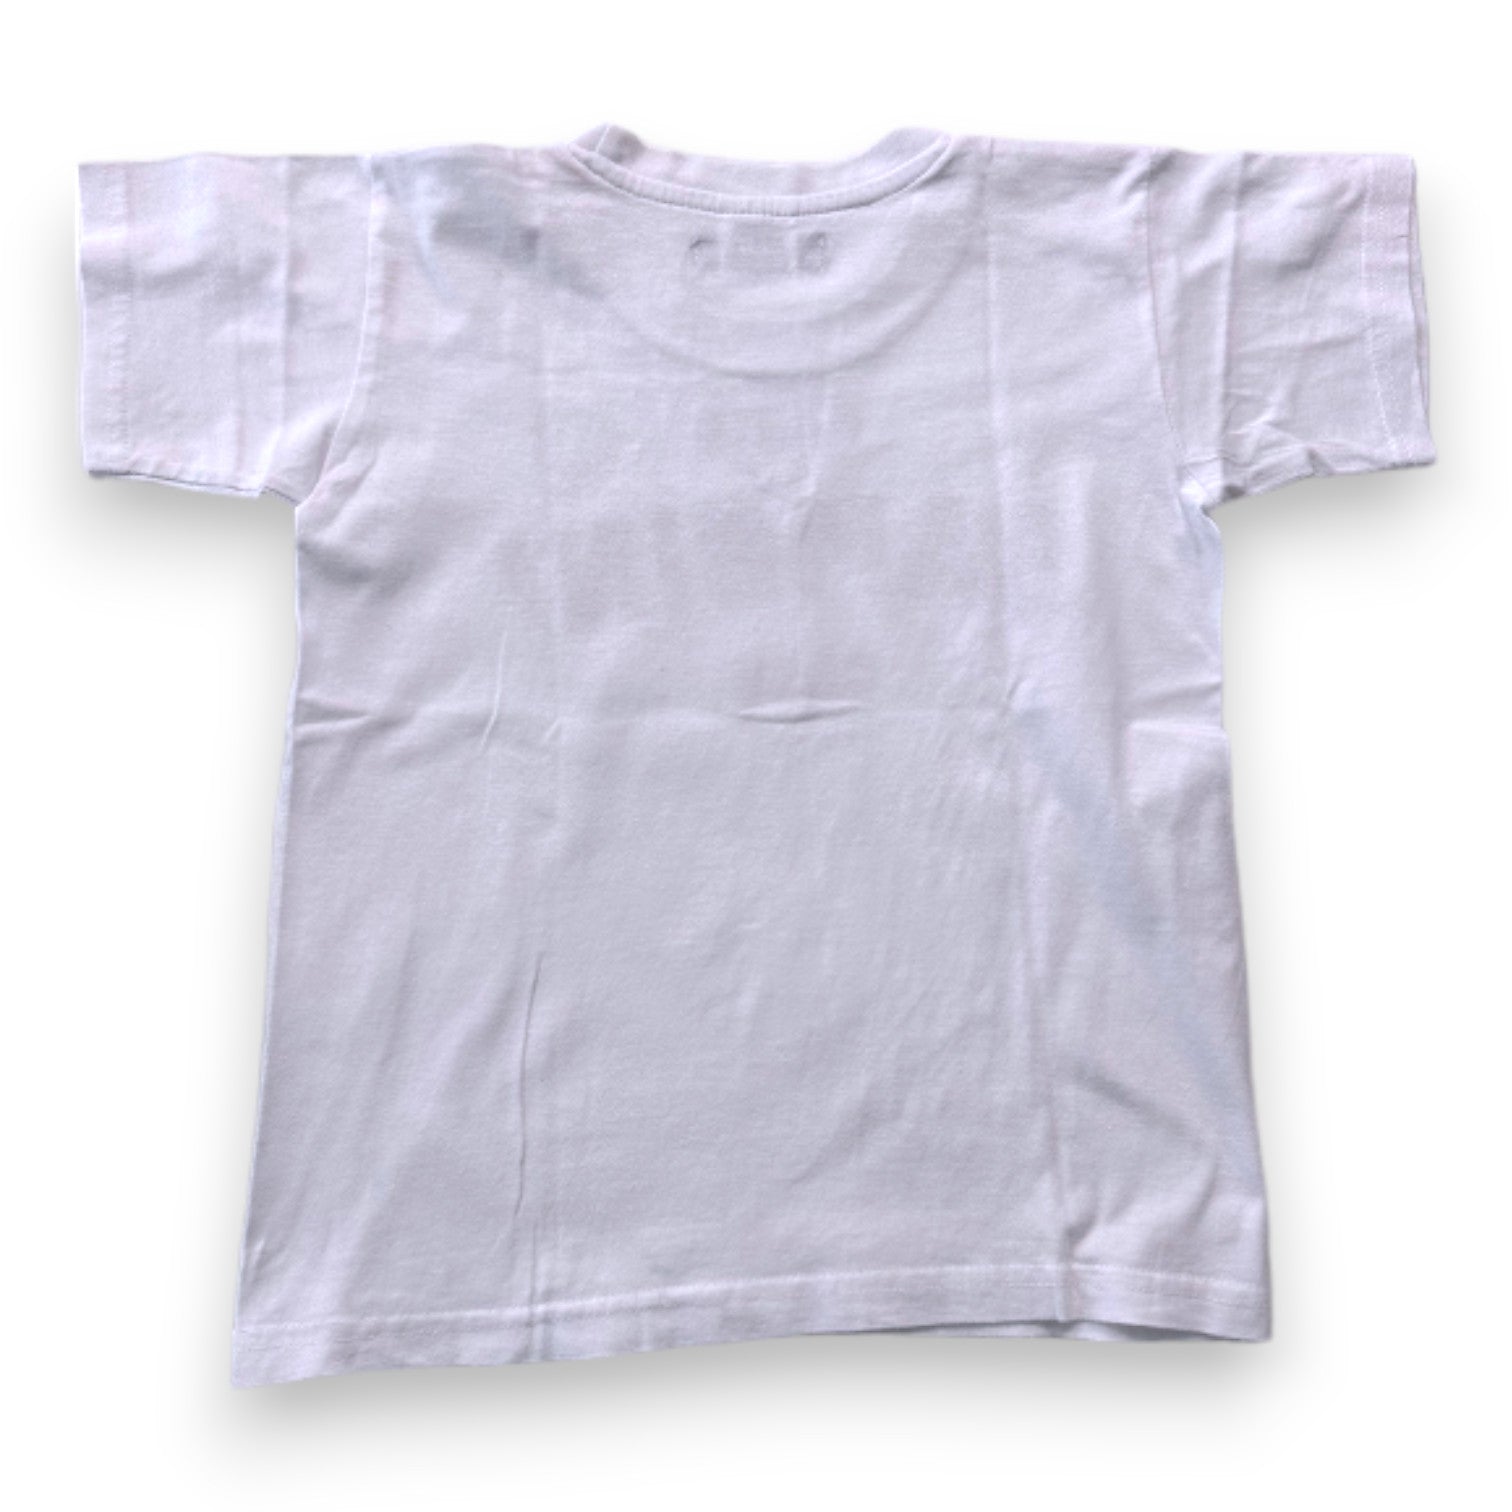 MOBILISATION GENARALE - T-shirt blanc "Paris Bambini Club" - 5 ans